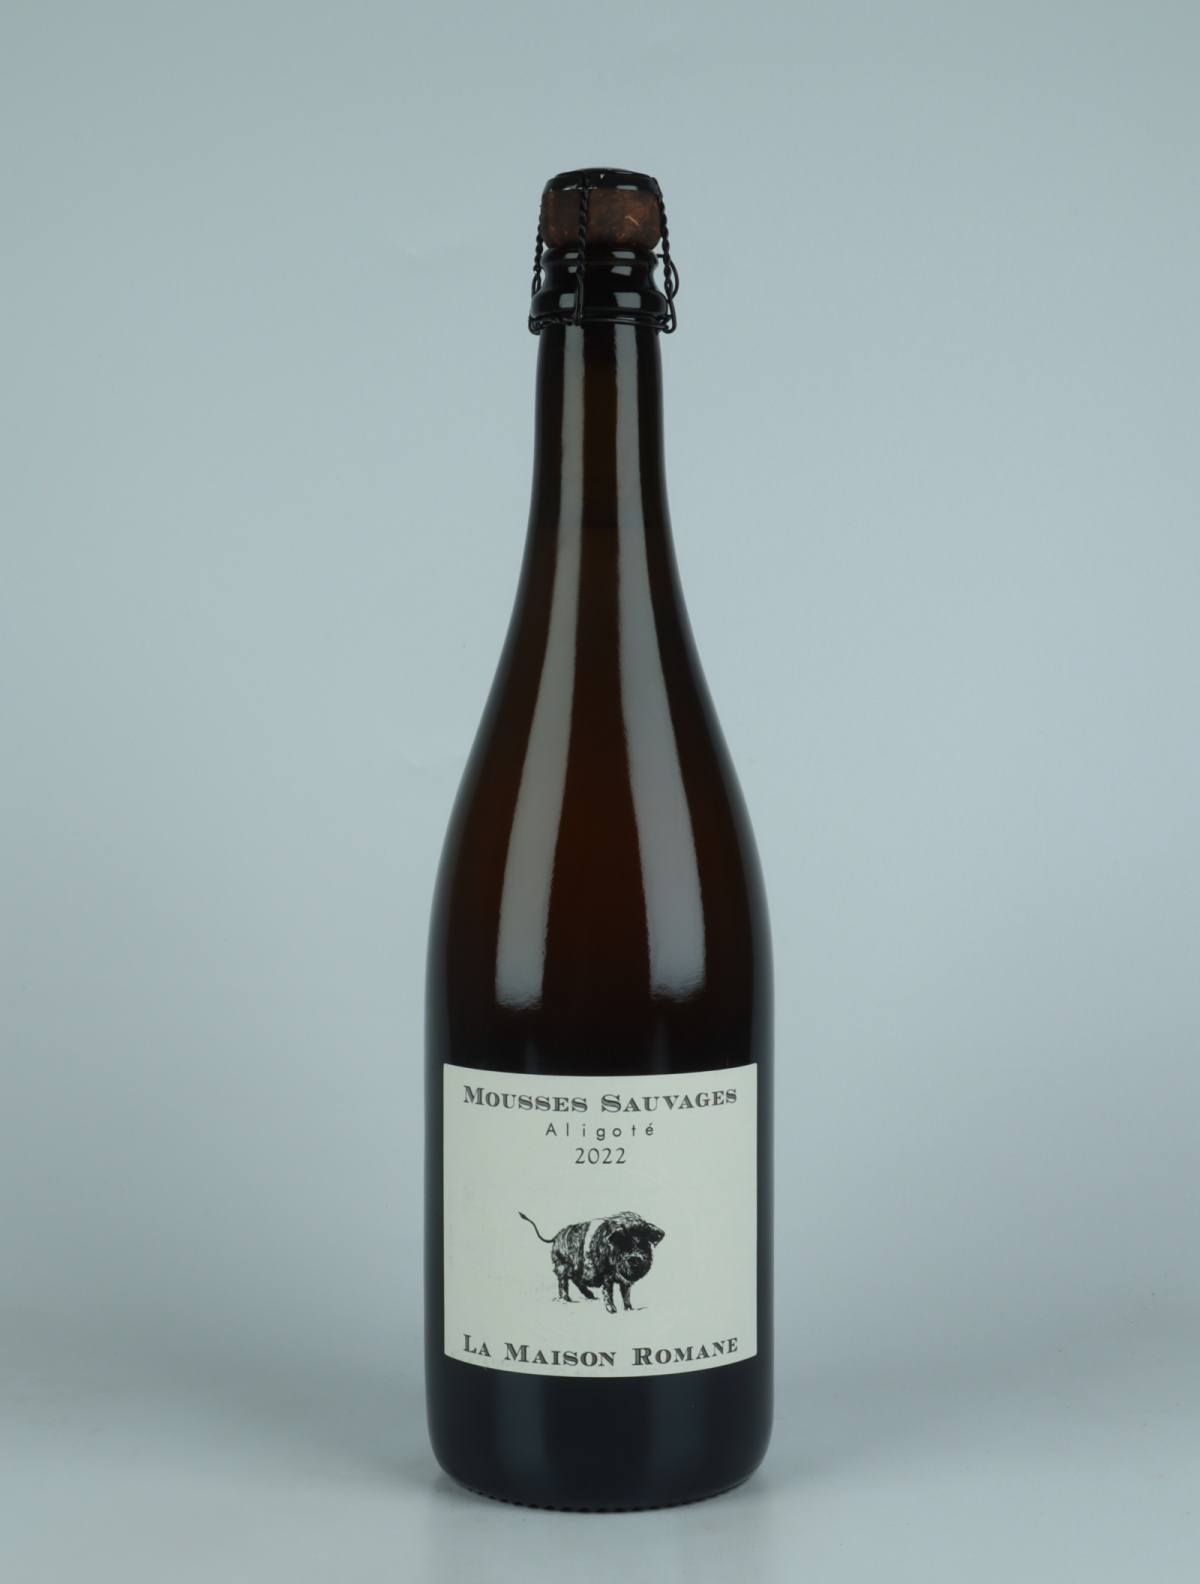 En flaske 2022 Mousses Sauvages Aligoté Øl fra La Maison Romane, Bourgogne i Frankrig